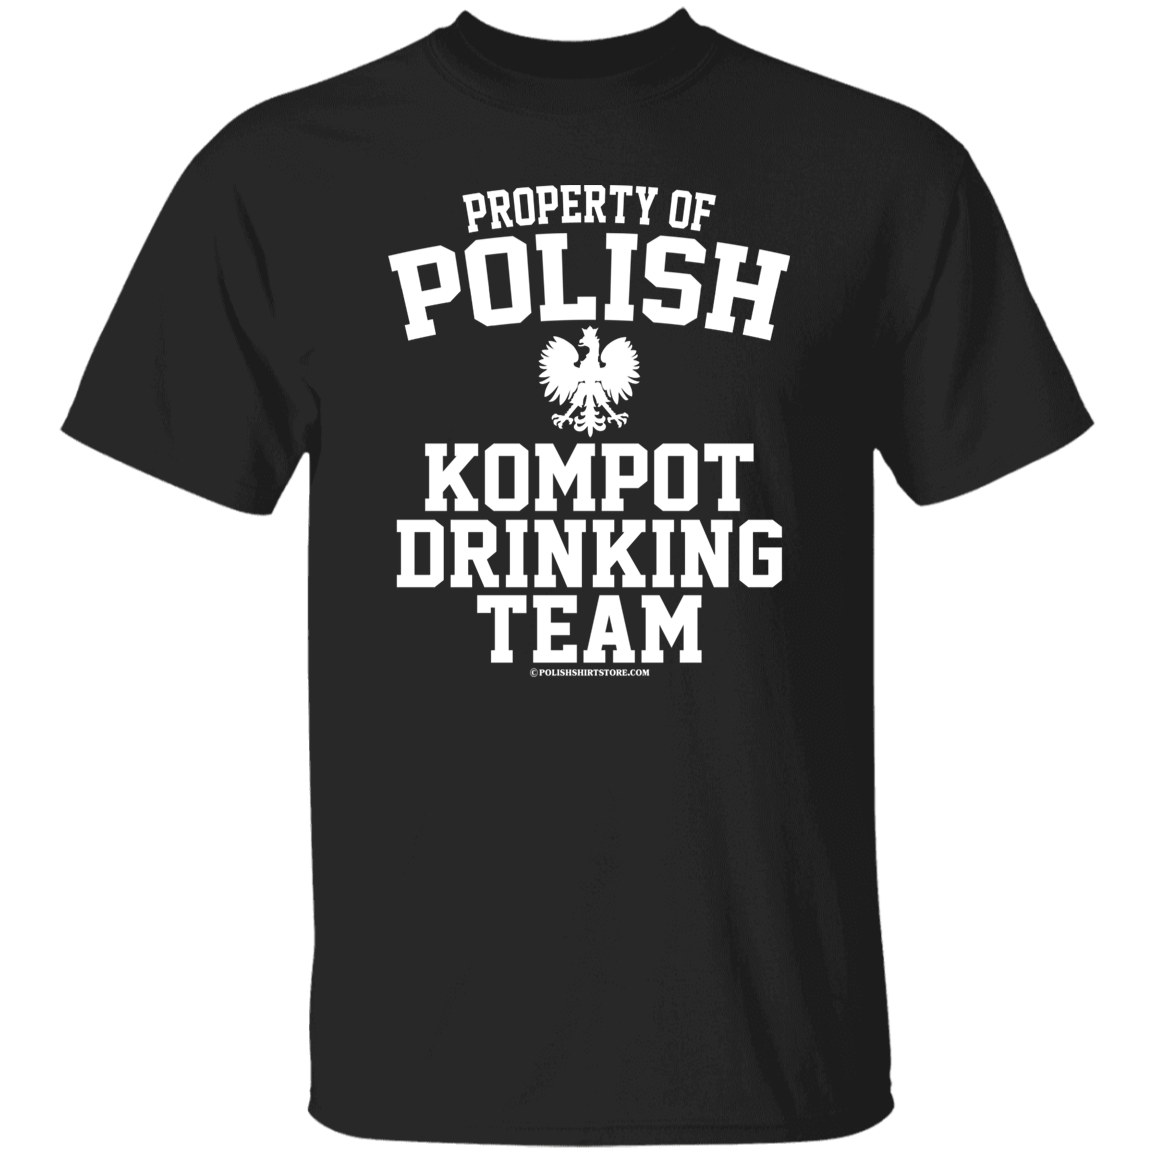 Property of Polish Kompot Drinking Team Apparel CustomCat G500 5.3 oz. T-Shirt Black S